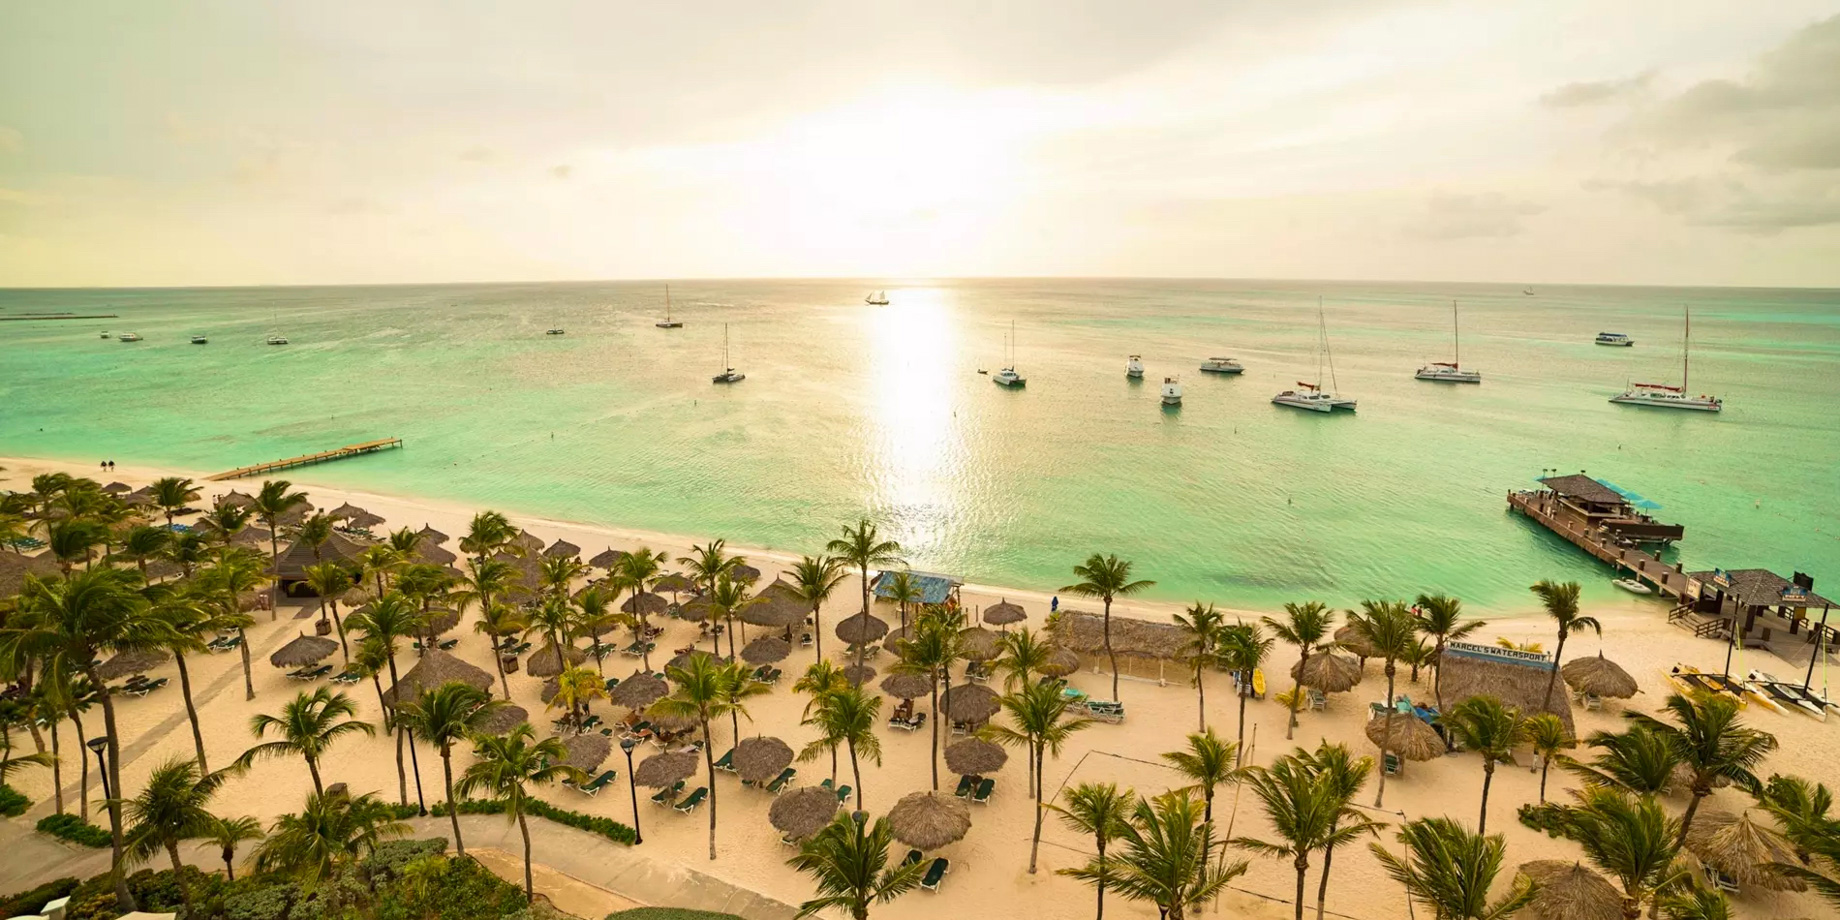 Barceló Aruba Palm Beach Resort – Noord, Aruba – Beach Resort Sunset